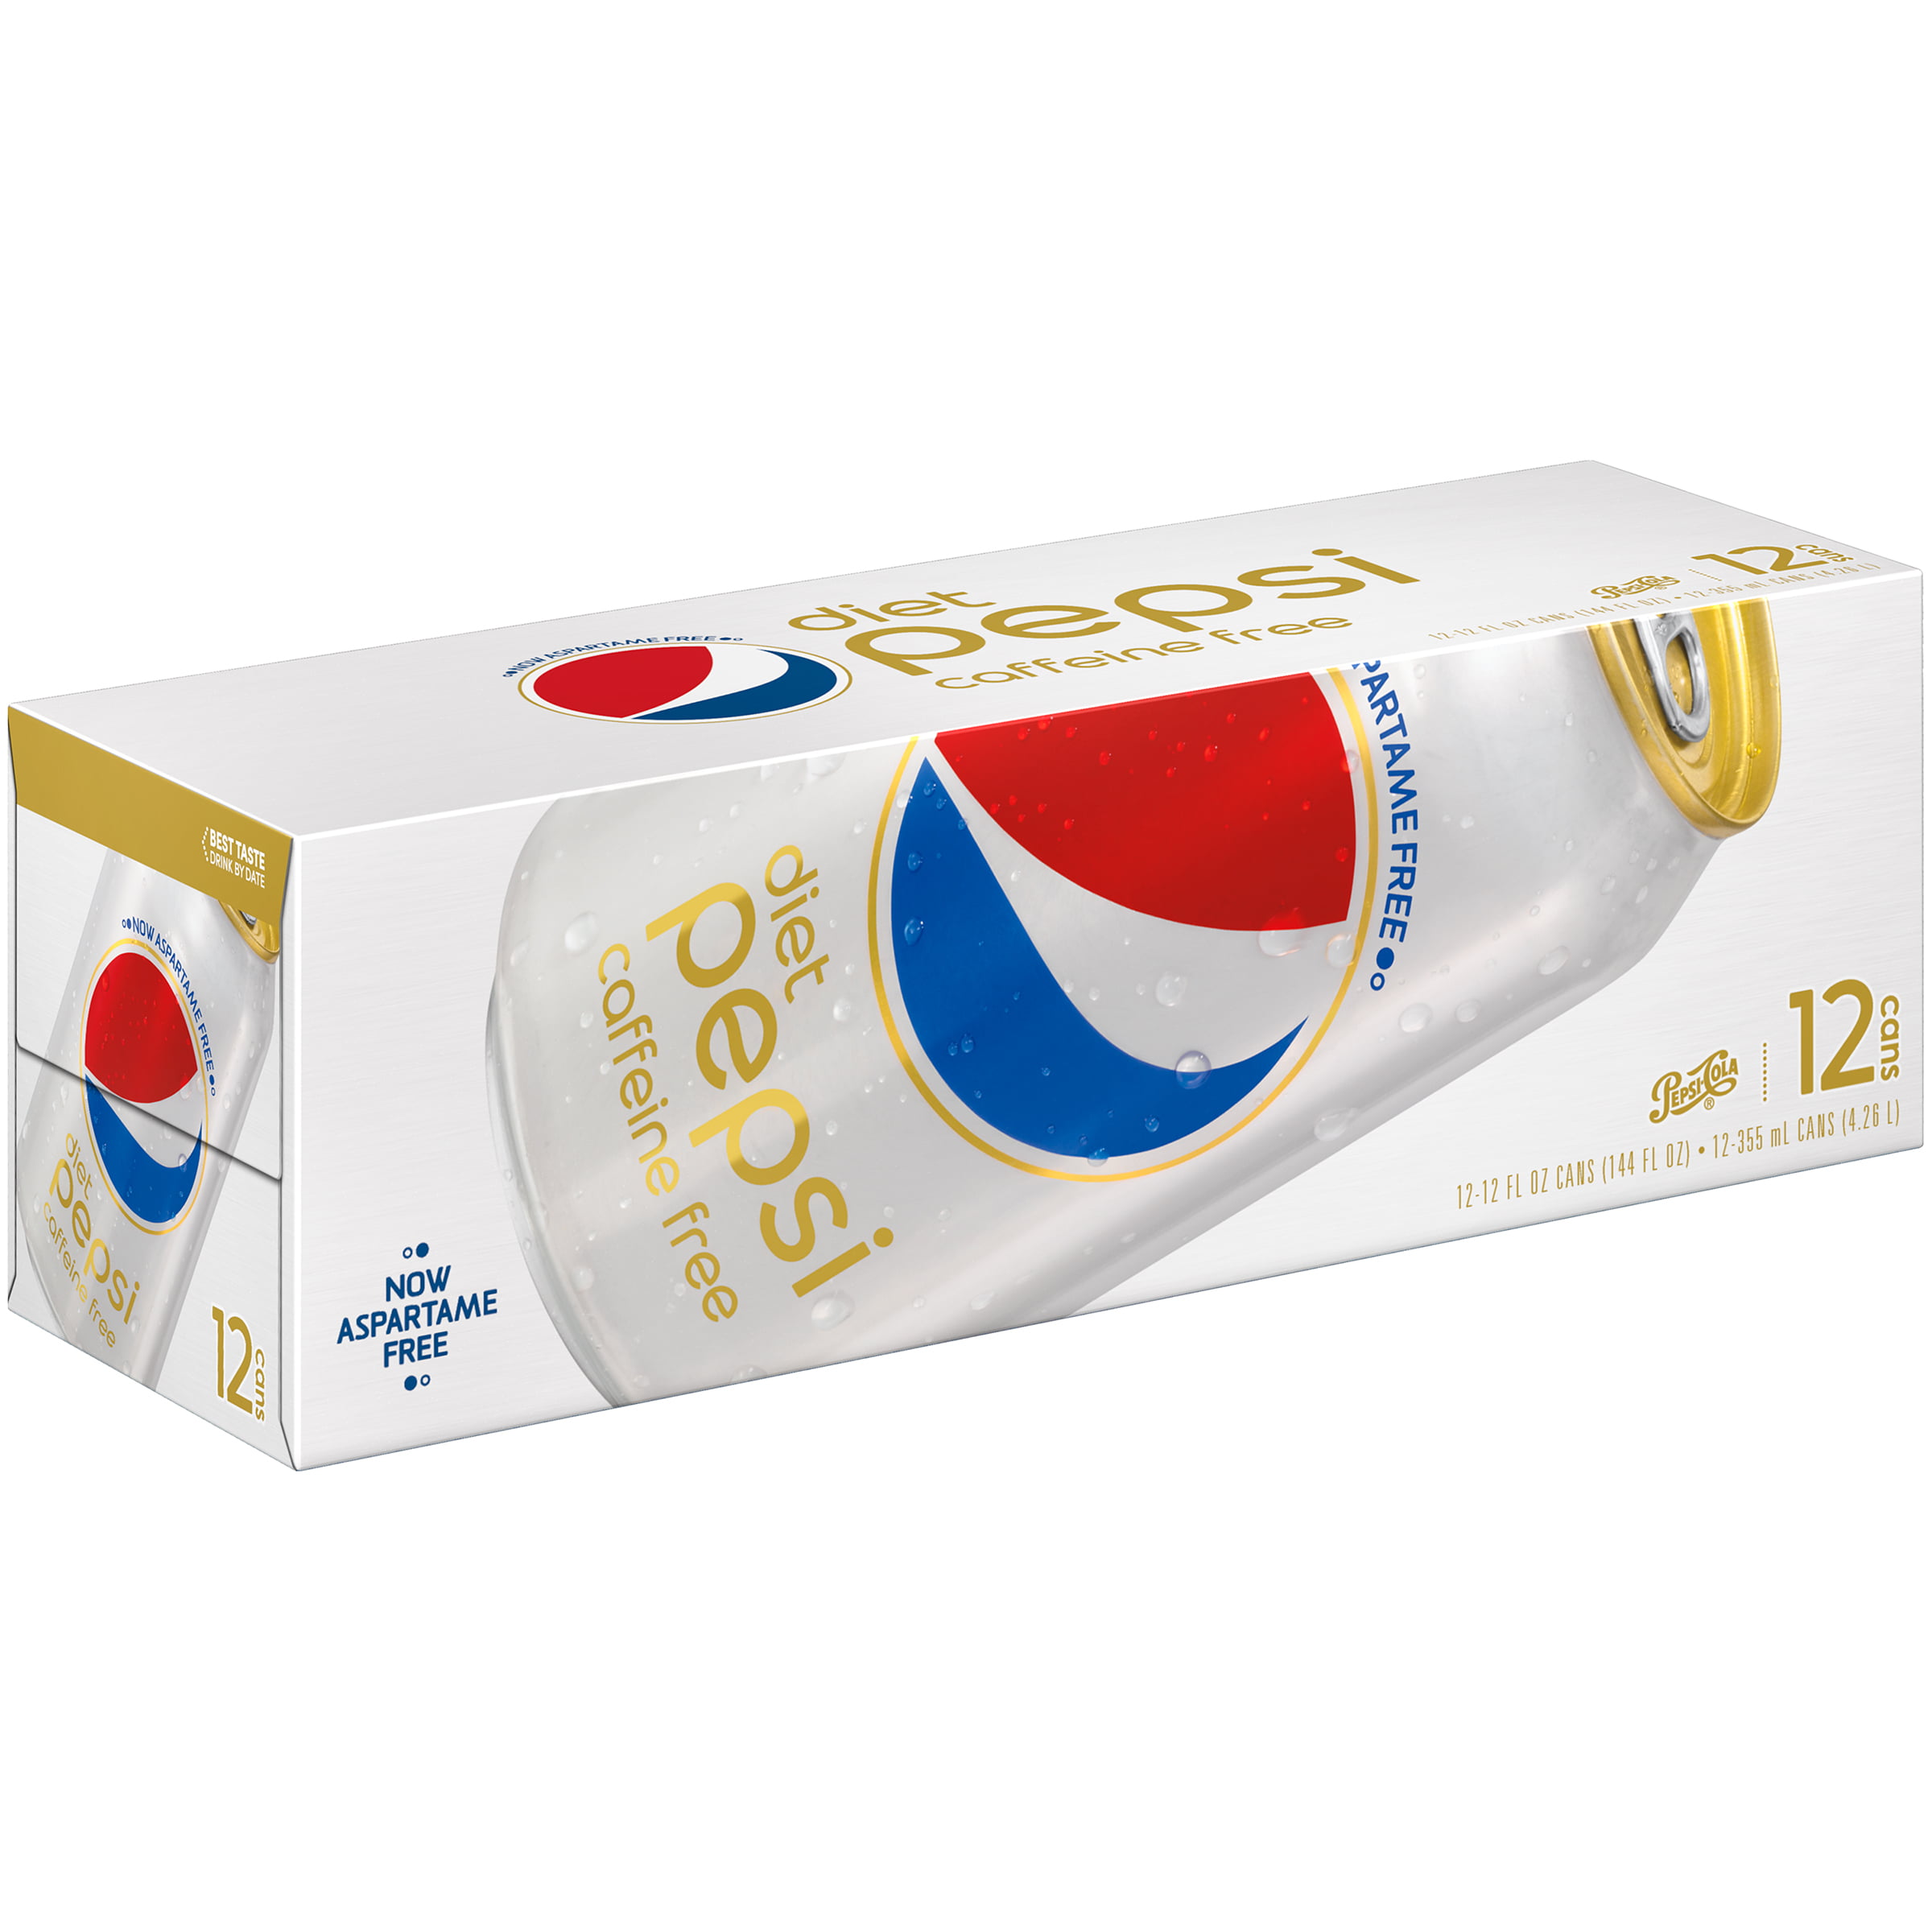 Diet Pepsi Caffeine Free, 12 Count, 12 fl. oz. Cans ...